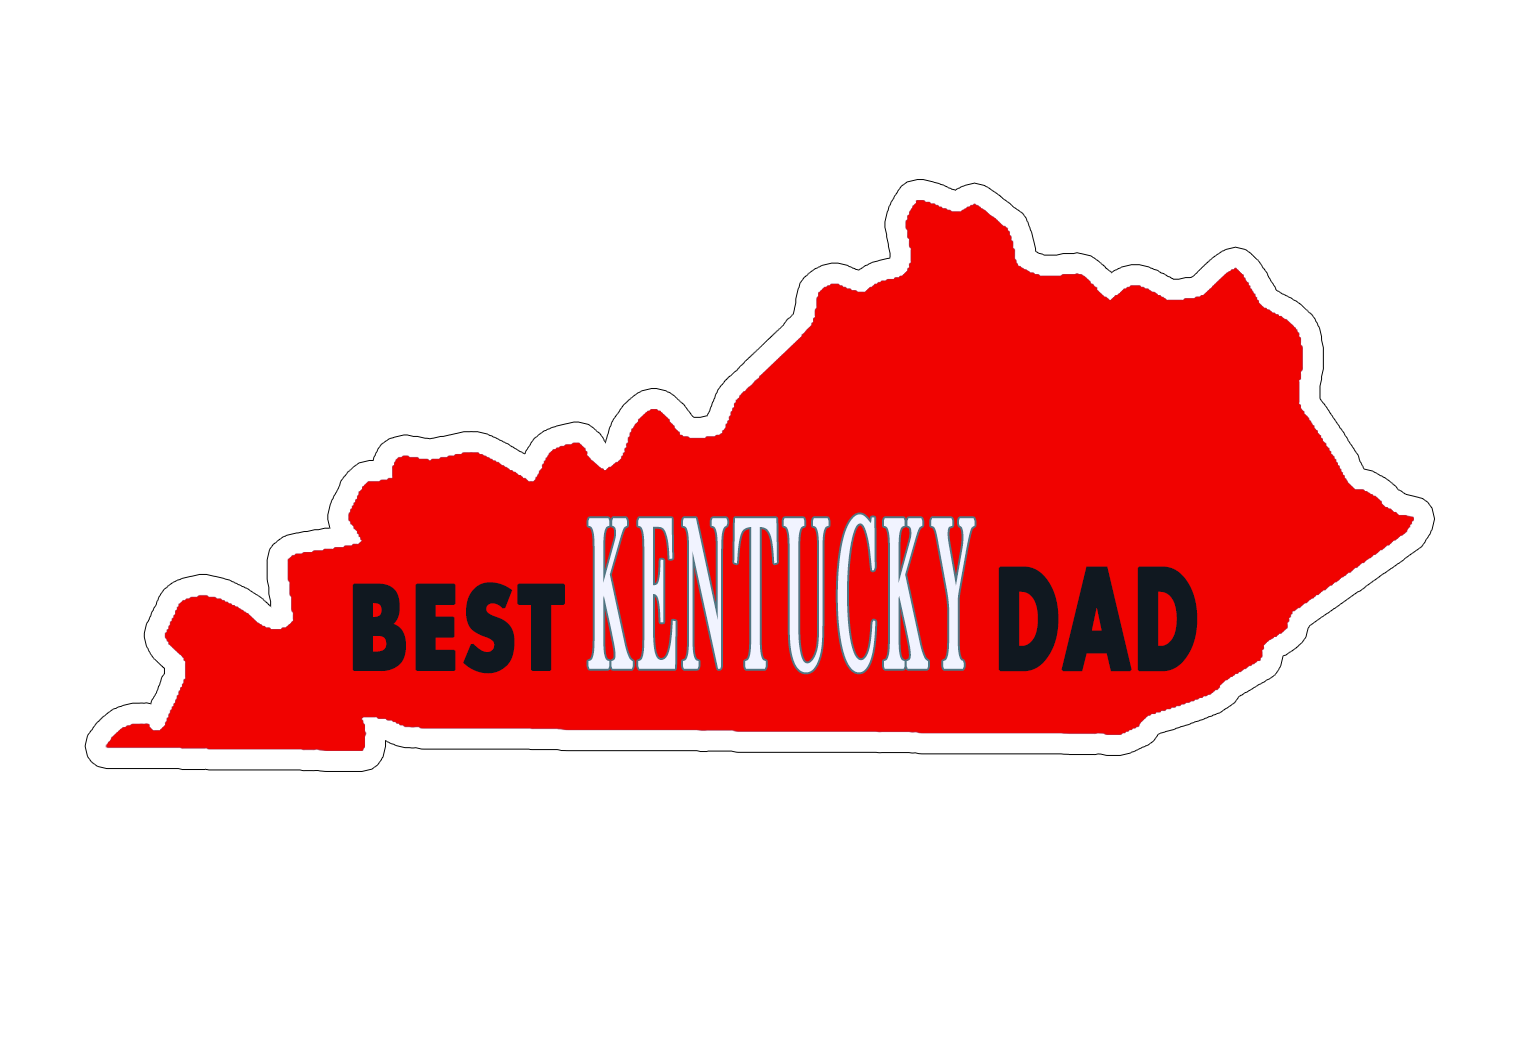 Best Kentucky Dad Red and Black Sticker